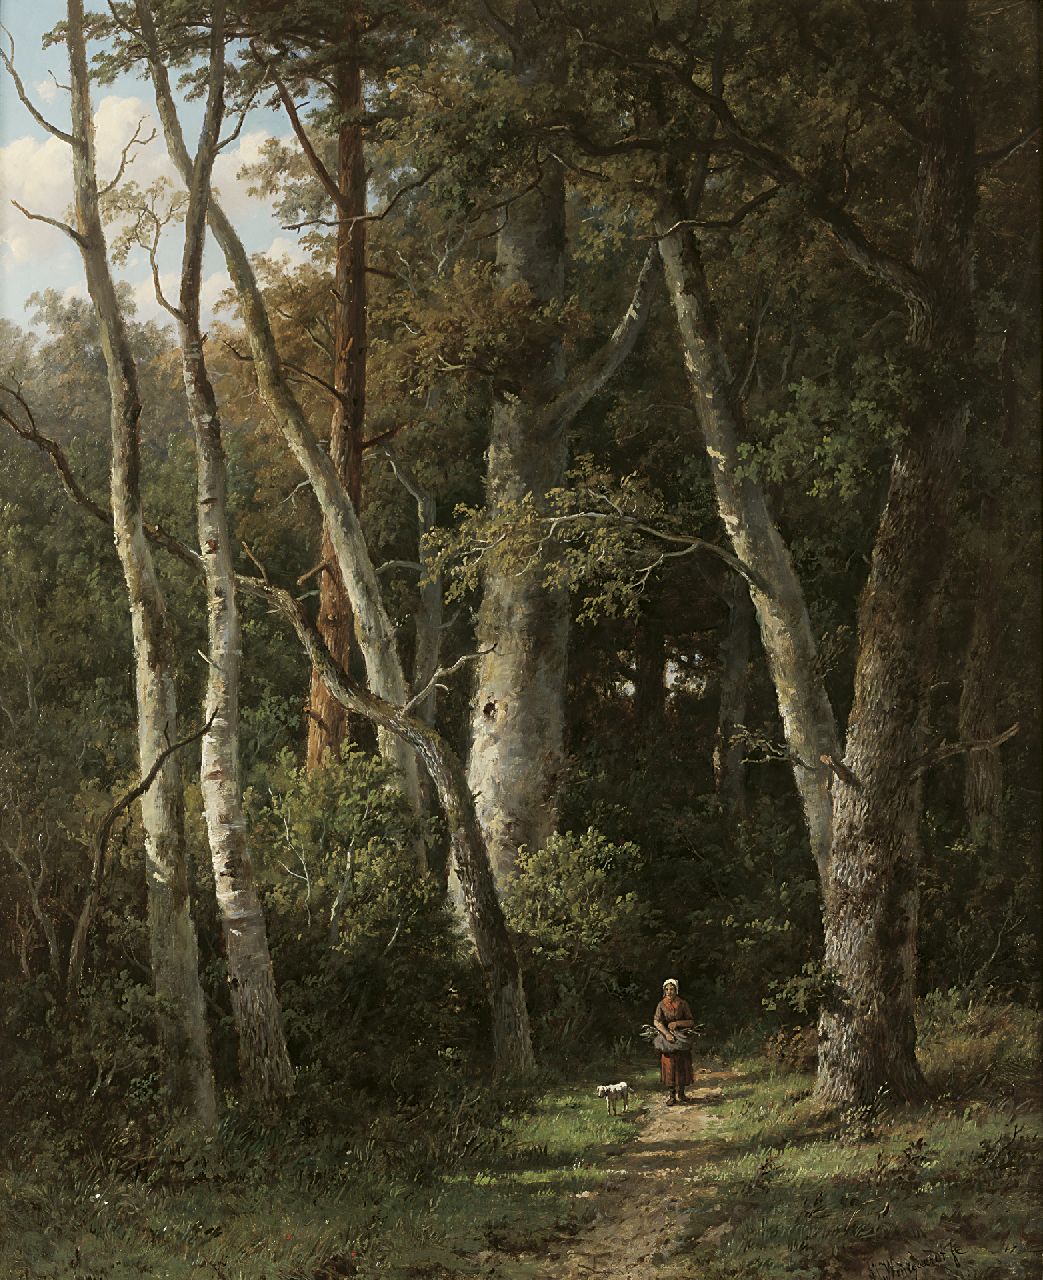 Wijngaerdt A.J. van | Anthonie Jacobus van Wijngaerdt, Gathering wood on a forest path, oil on panel 66.2 x 54.0 cm, signed l.r.